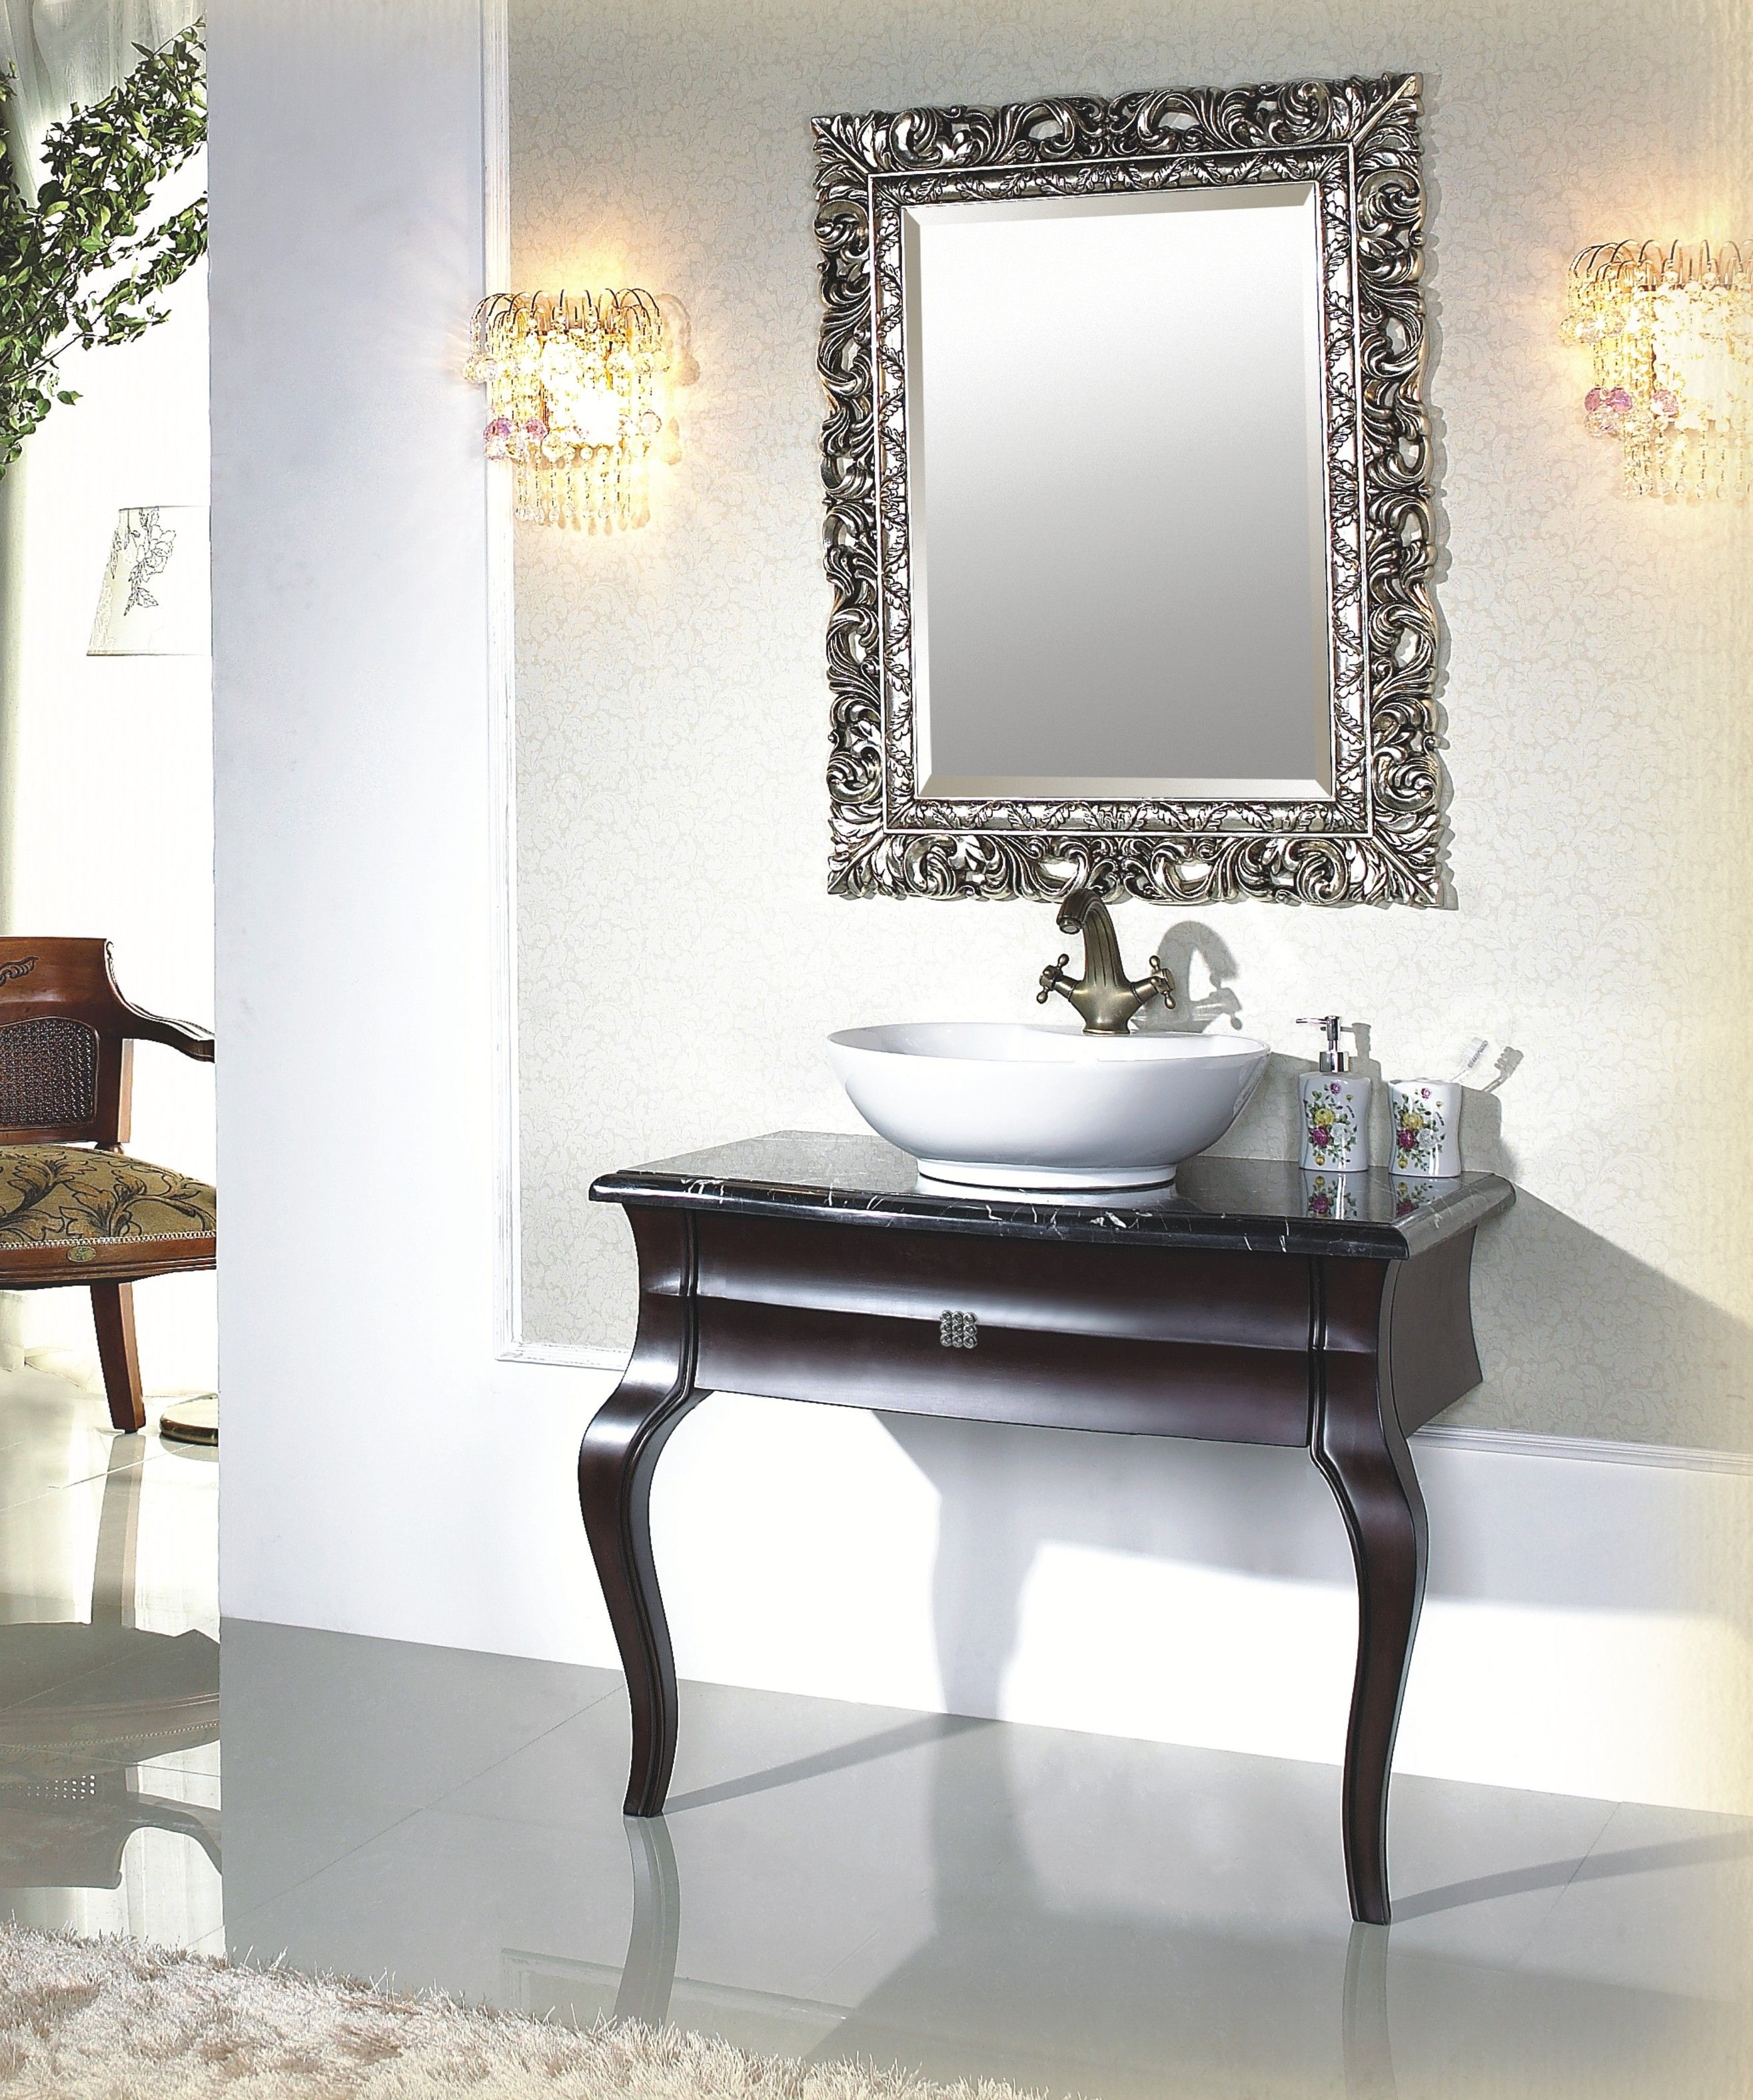 Vintage Bathroom Mirror Ideas Creative Bathroom Decoration Pertaining To Antique Mirrors For Bathrooms (View 3 of 15)